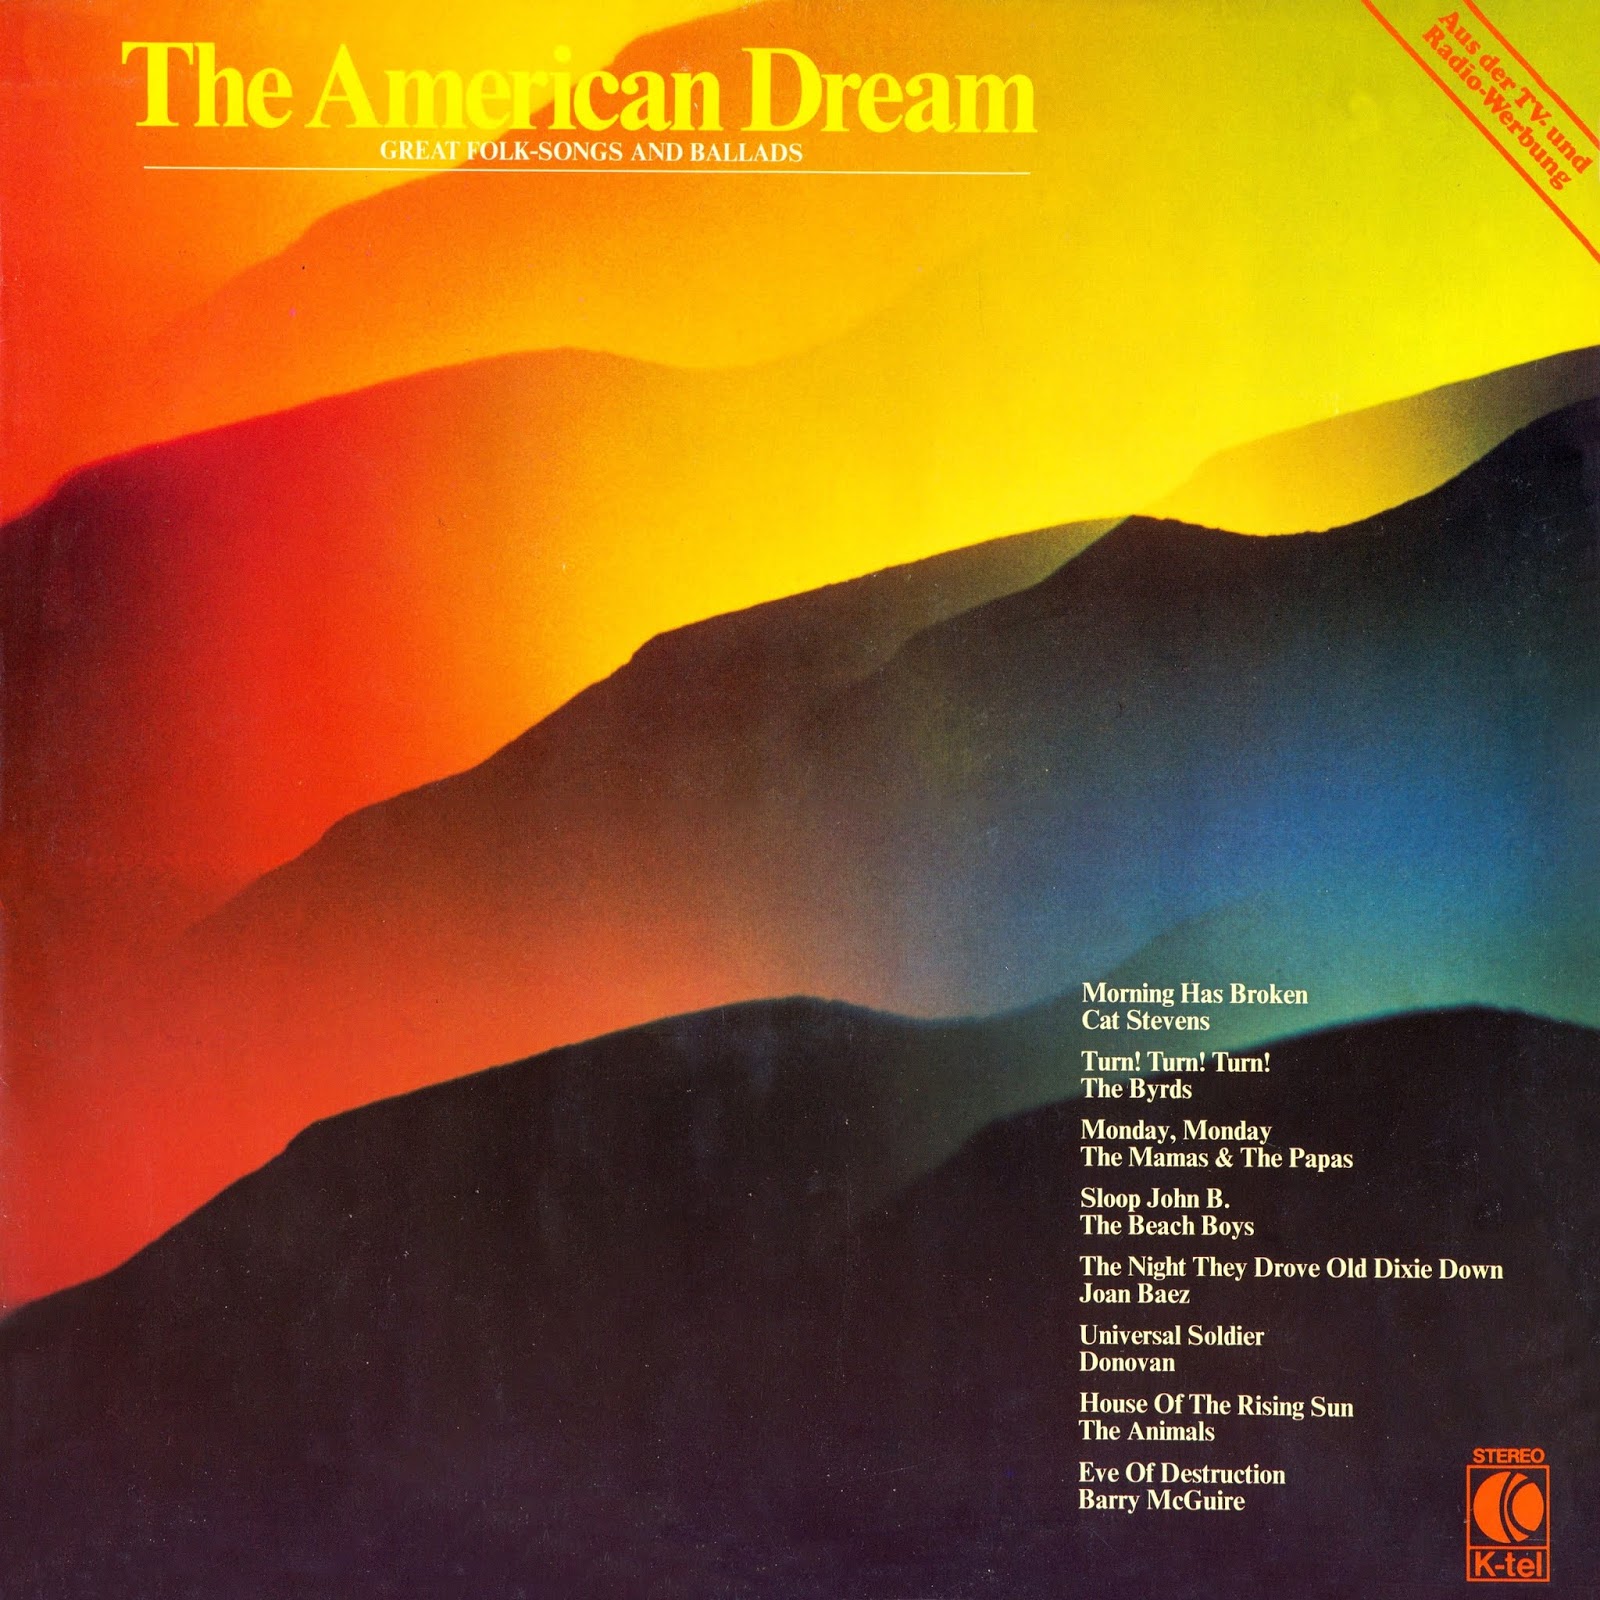 Dream greatest. Folk Songs and Ballads. The mamas and the Papas House of the Rising Sun альбом. American Dream песня. Американская мечта песня.